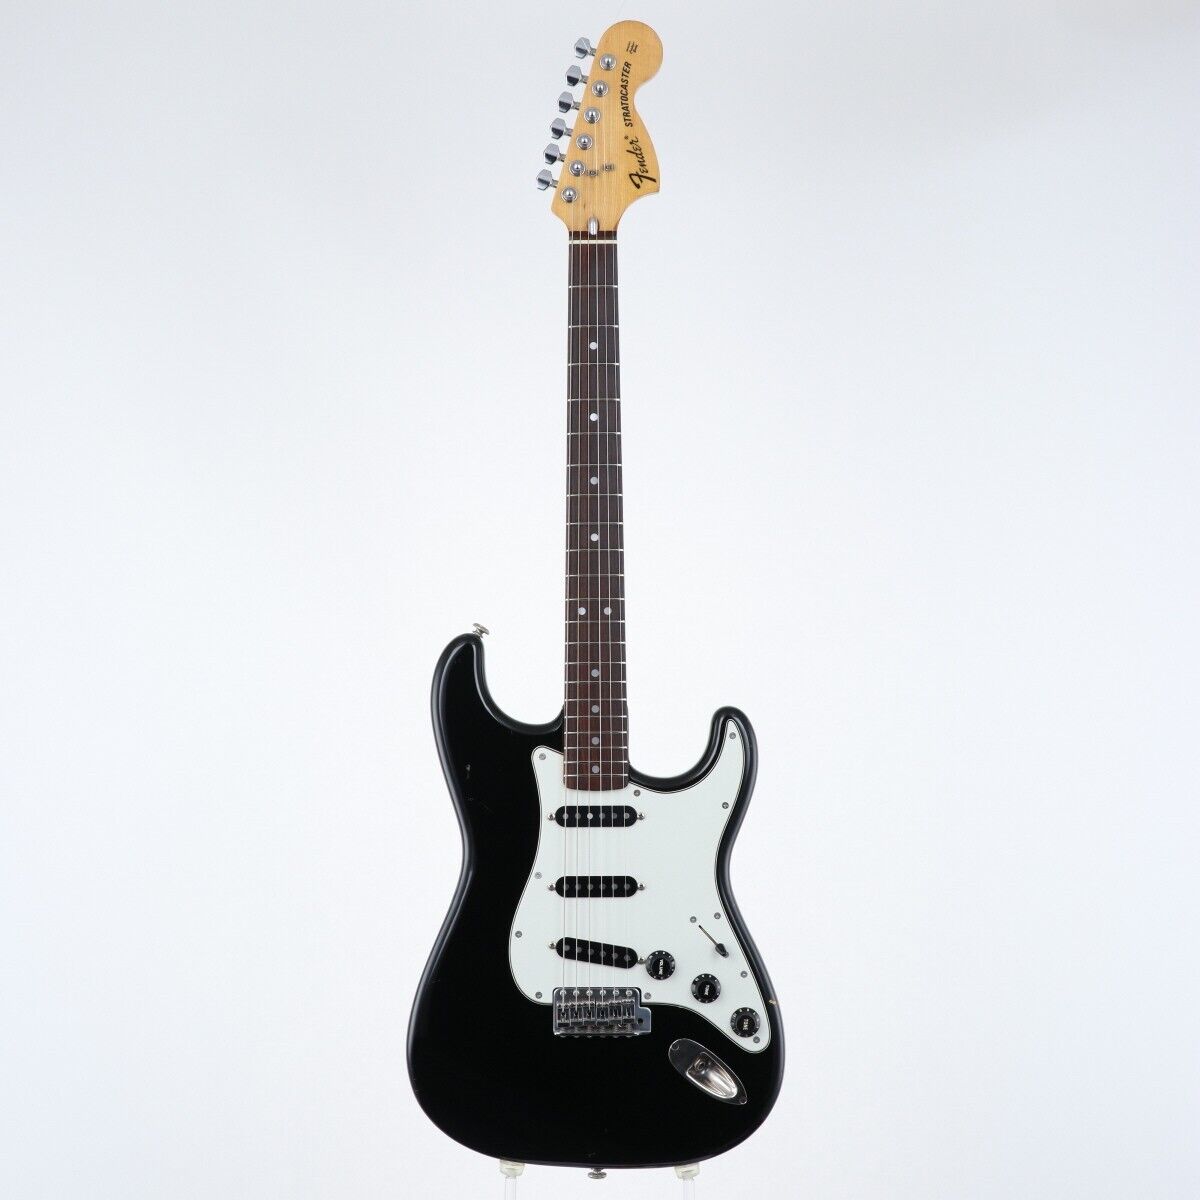 Fender Japan ST72-55 /R Stratocaster Black Made in Japan 1986-87 Electric Guitar black electric fender guitar japan made stratocaster 